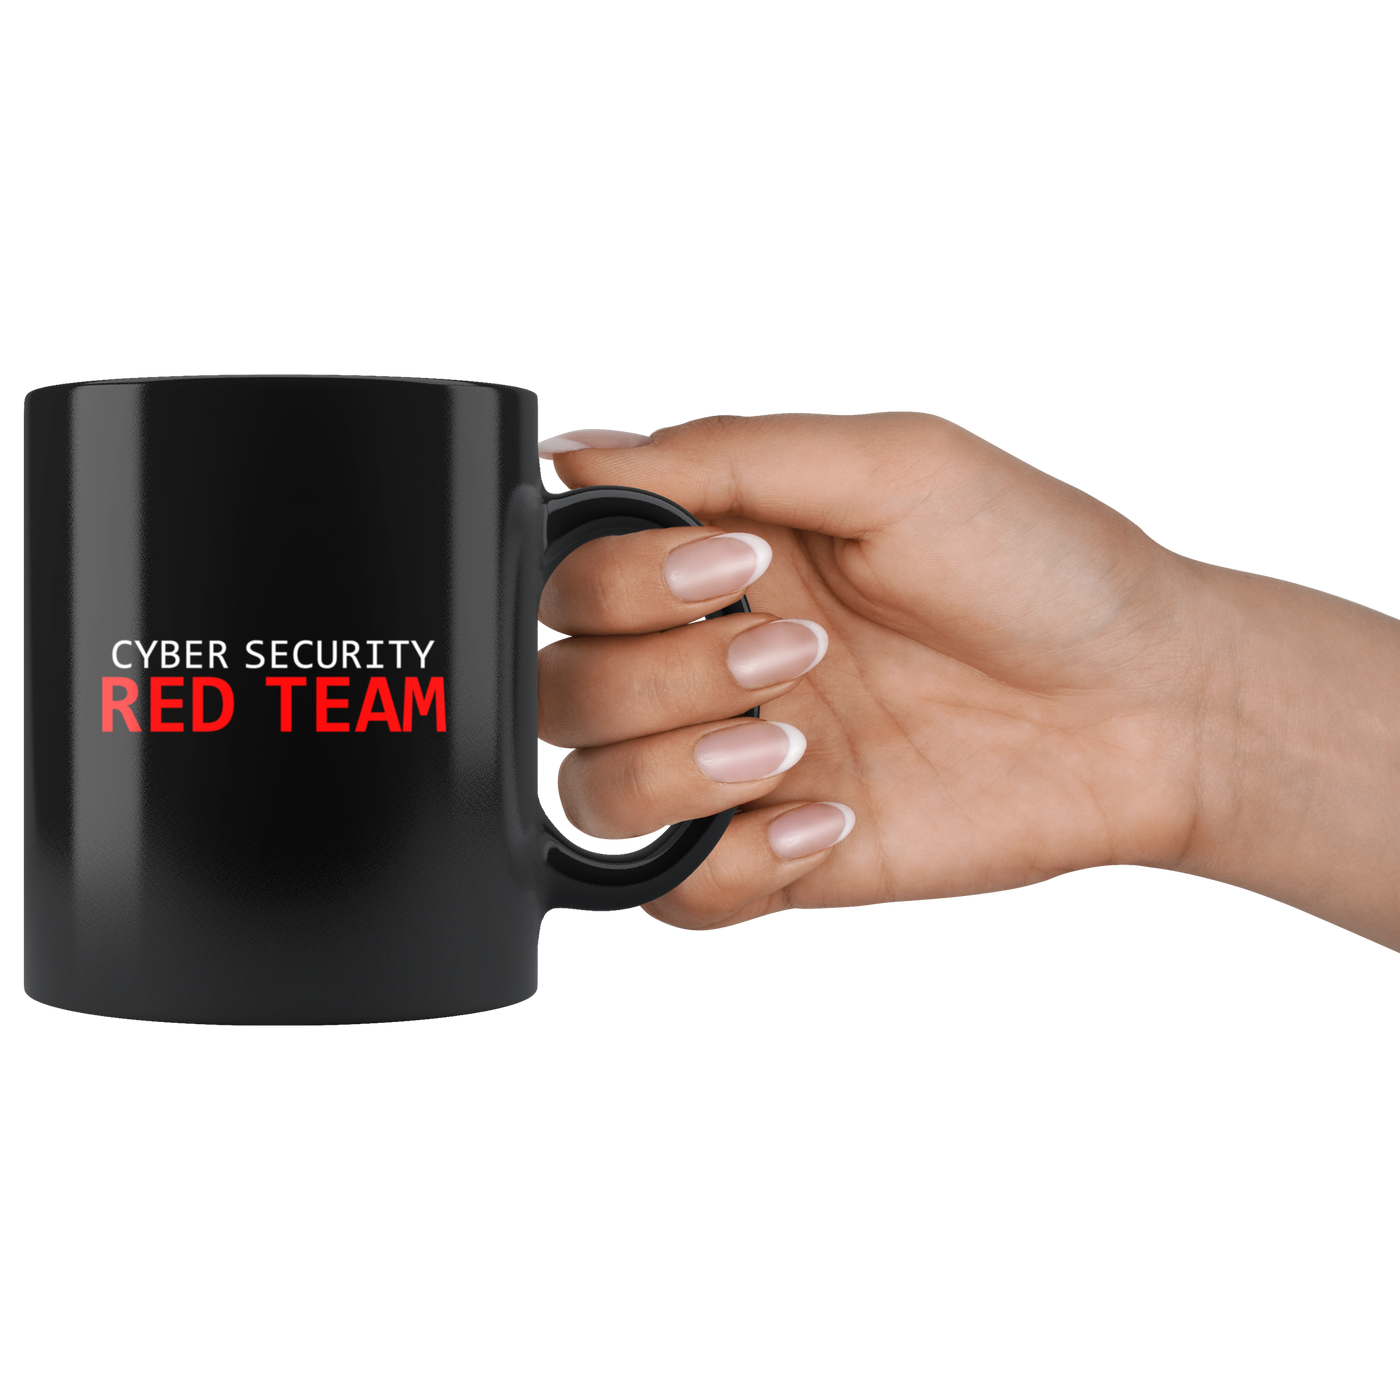 Cyber security red team - Mug